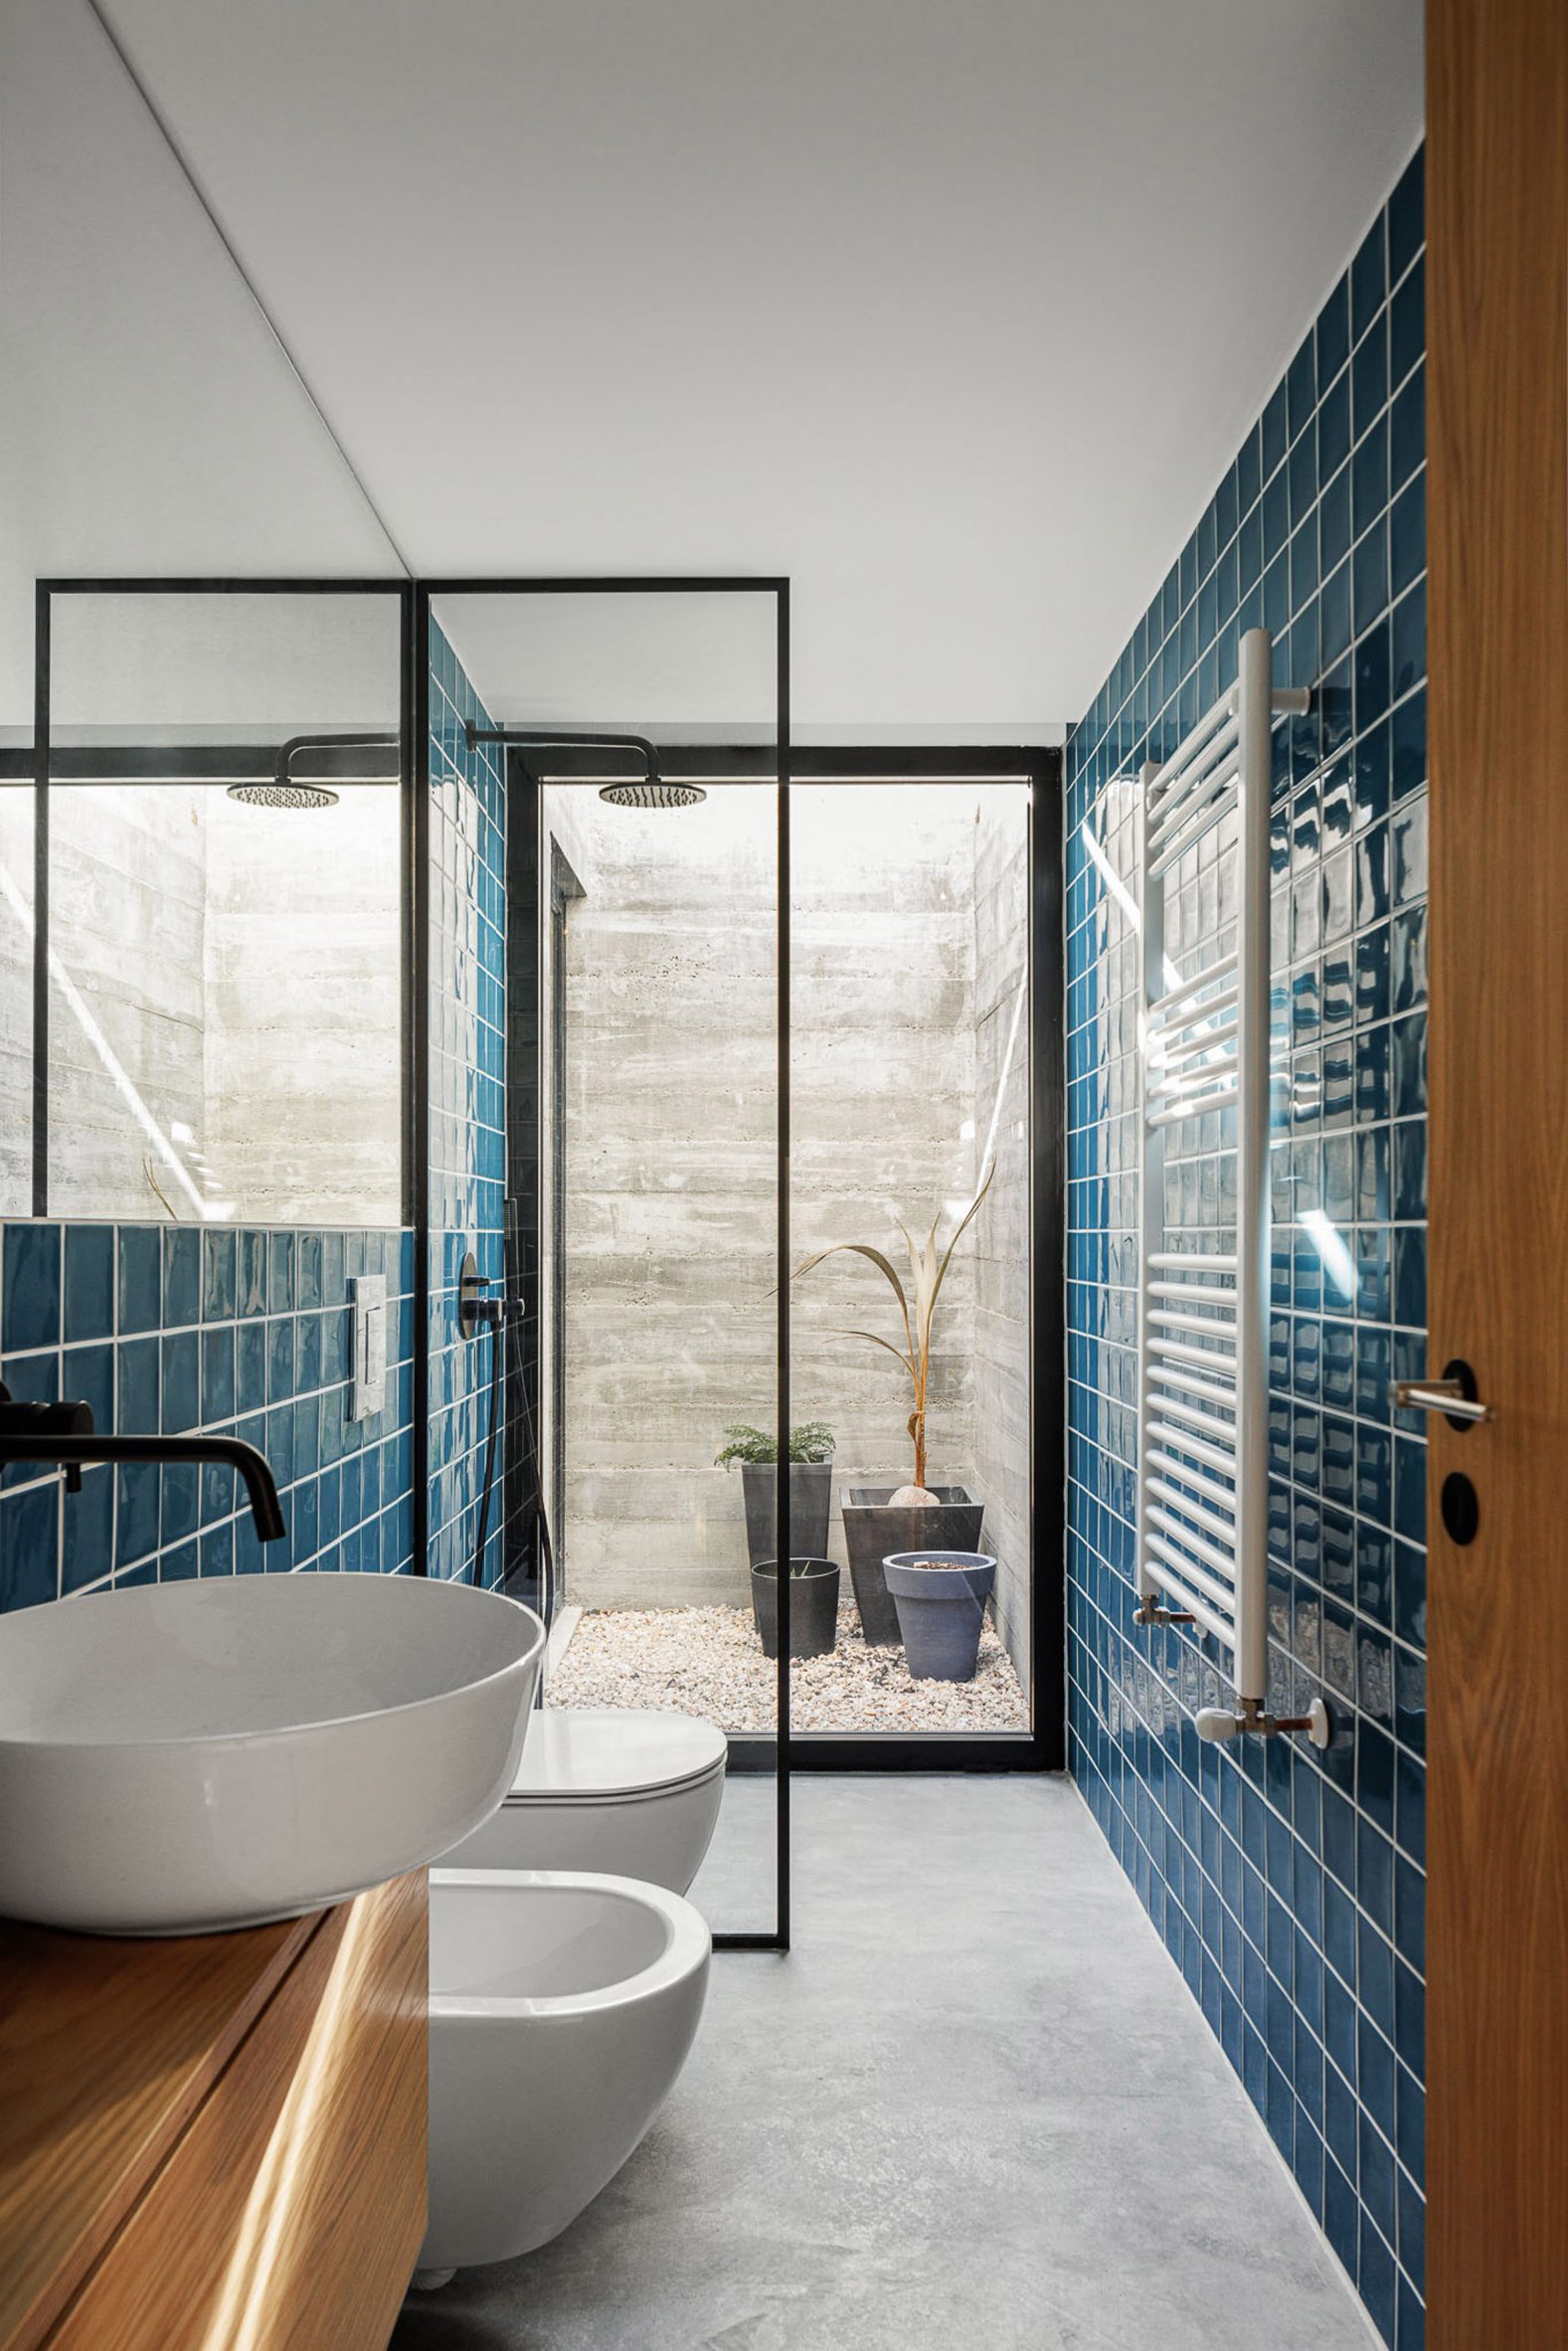 Bathroom with blue wall tiles